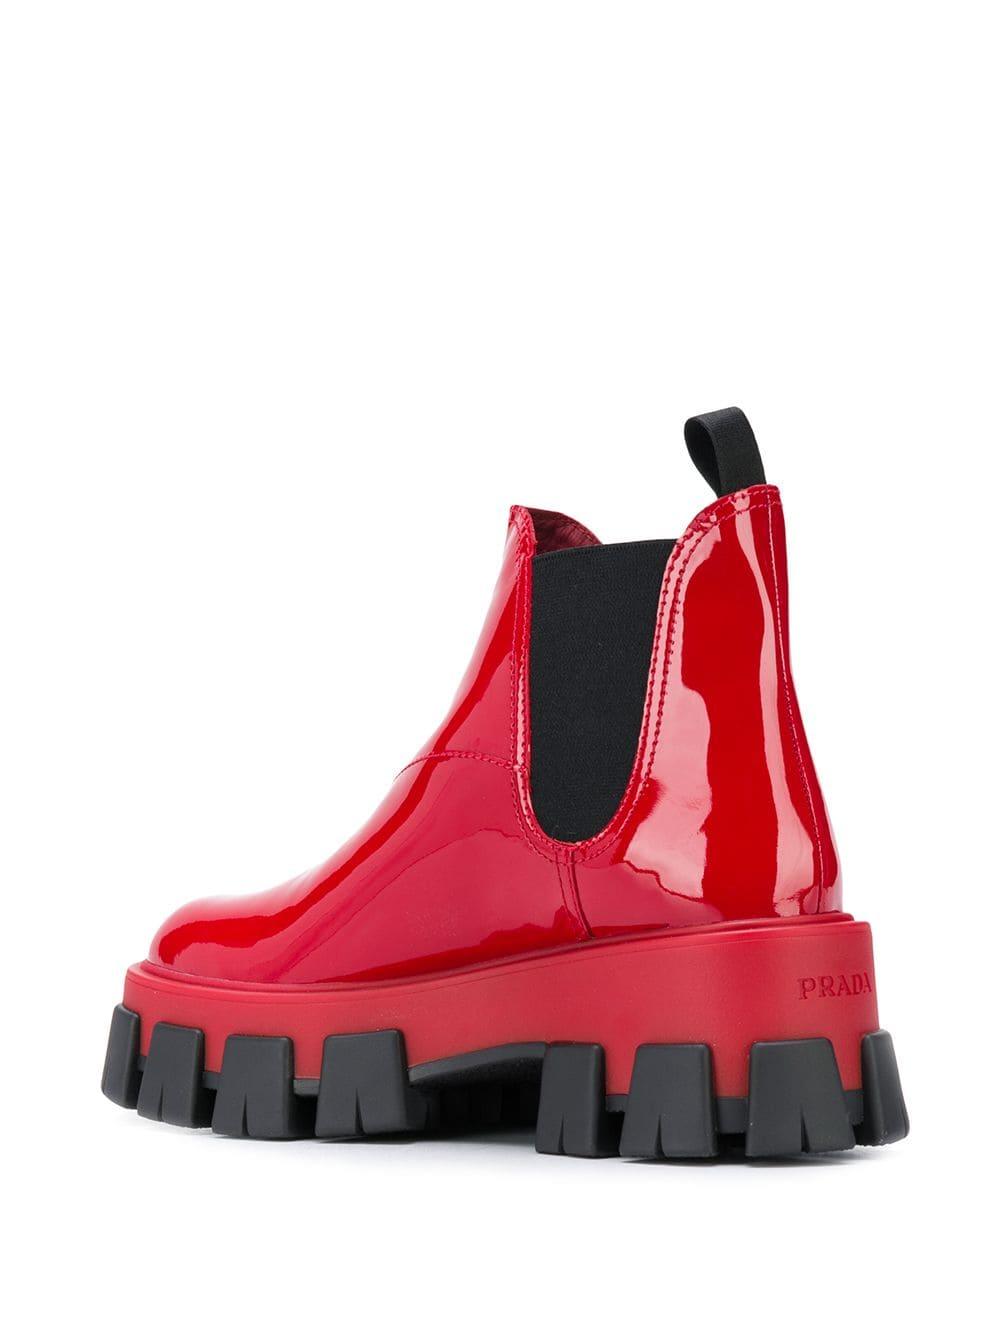 Wellington boots Prada Red size 38 EU in Rubber - 30984502